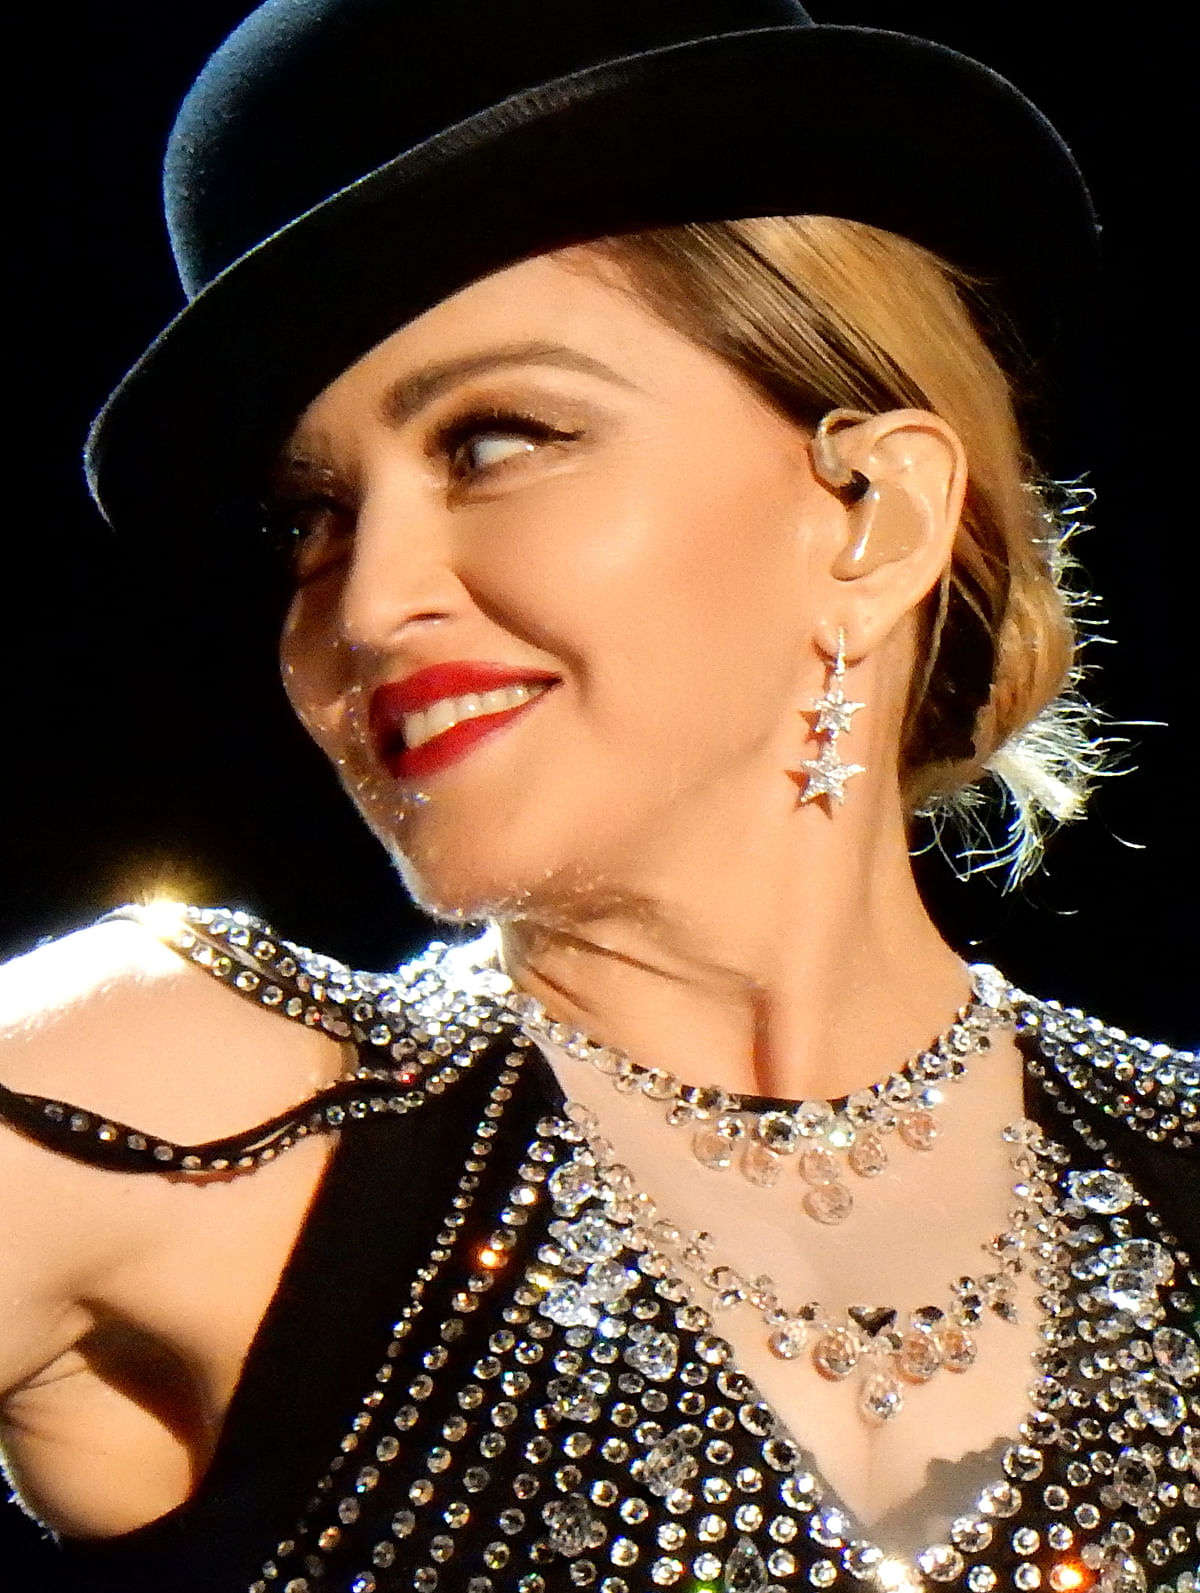 File photo of Madonna